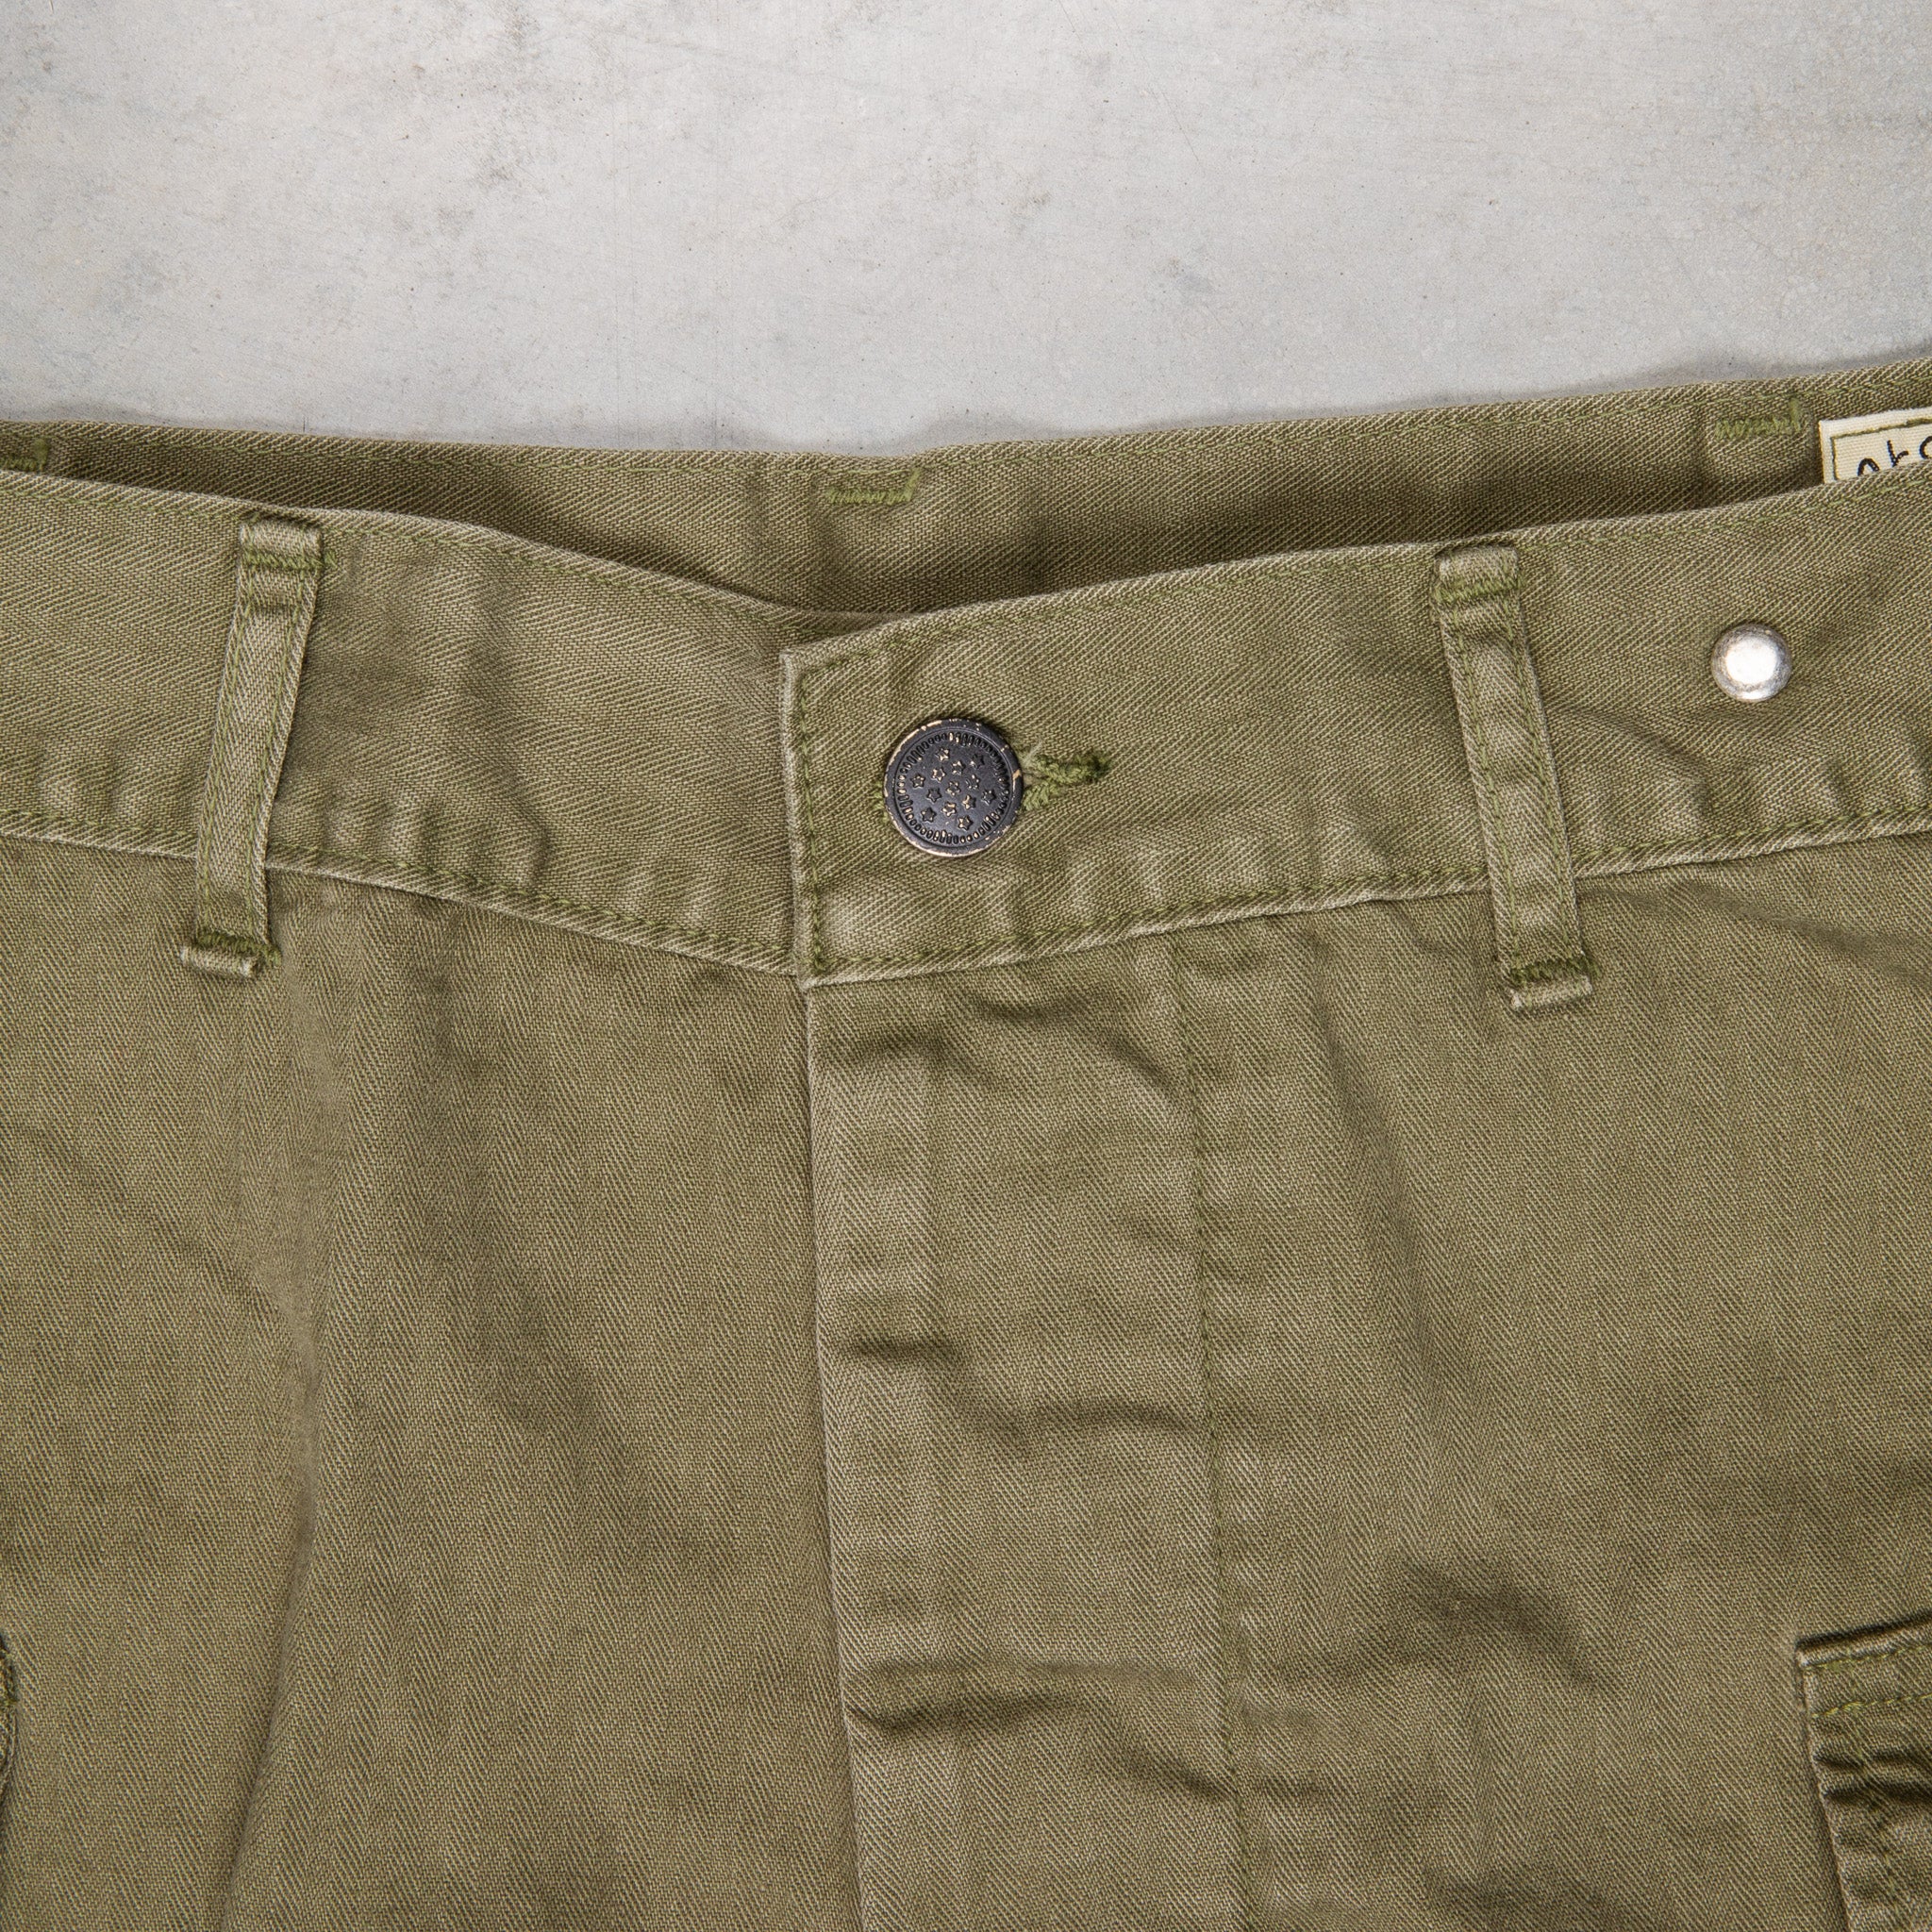 Orslow U.S Army 2 pocket cargo shorts Army Green